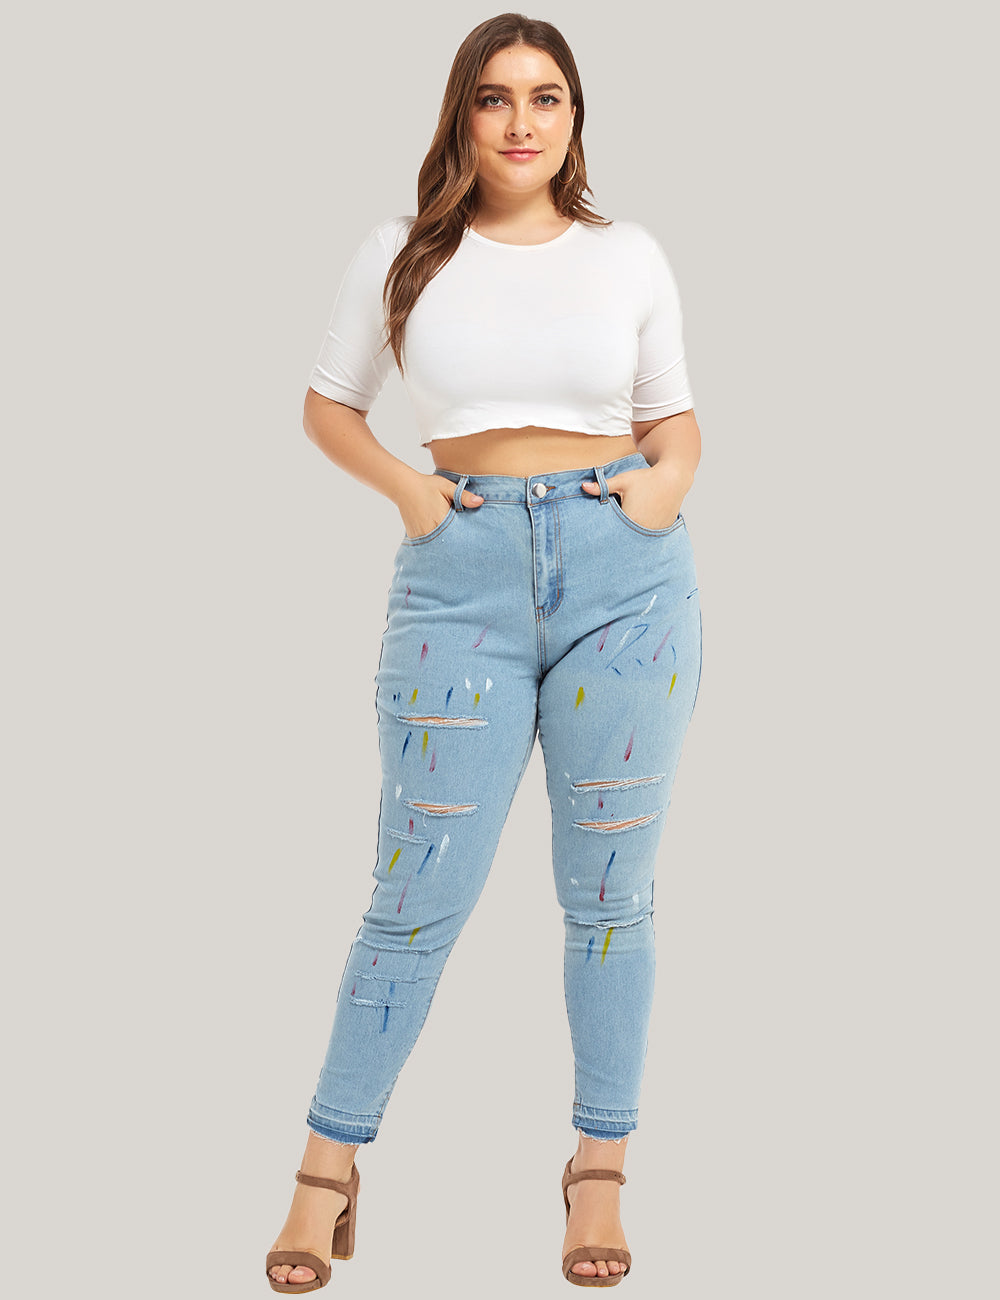 M-4XL Plus Size Skinny Jeans Women Casual Hole Denim Jeans Nature Waist Pencil Pants Washed Summer Mom Jean Femme Pants